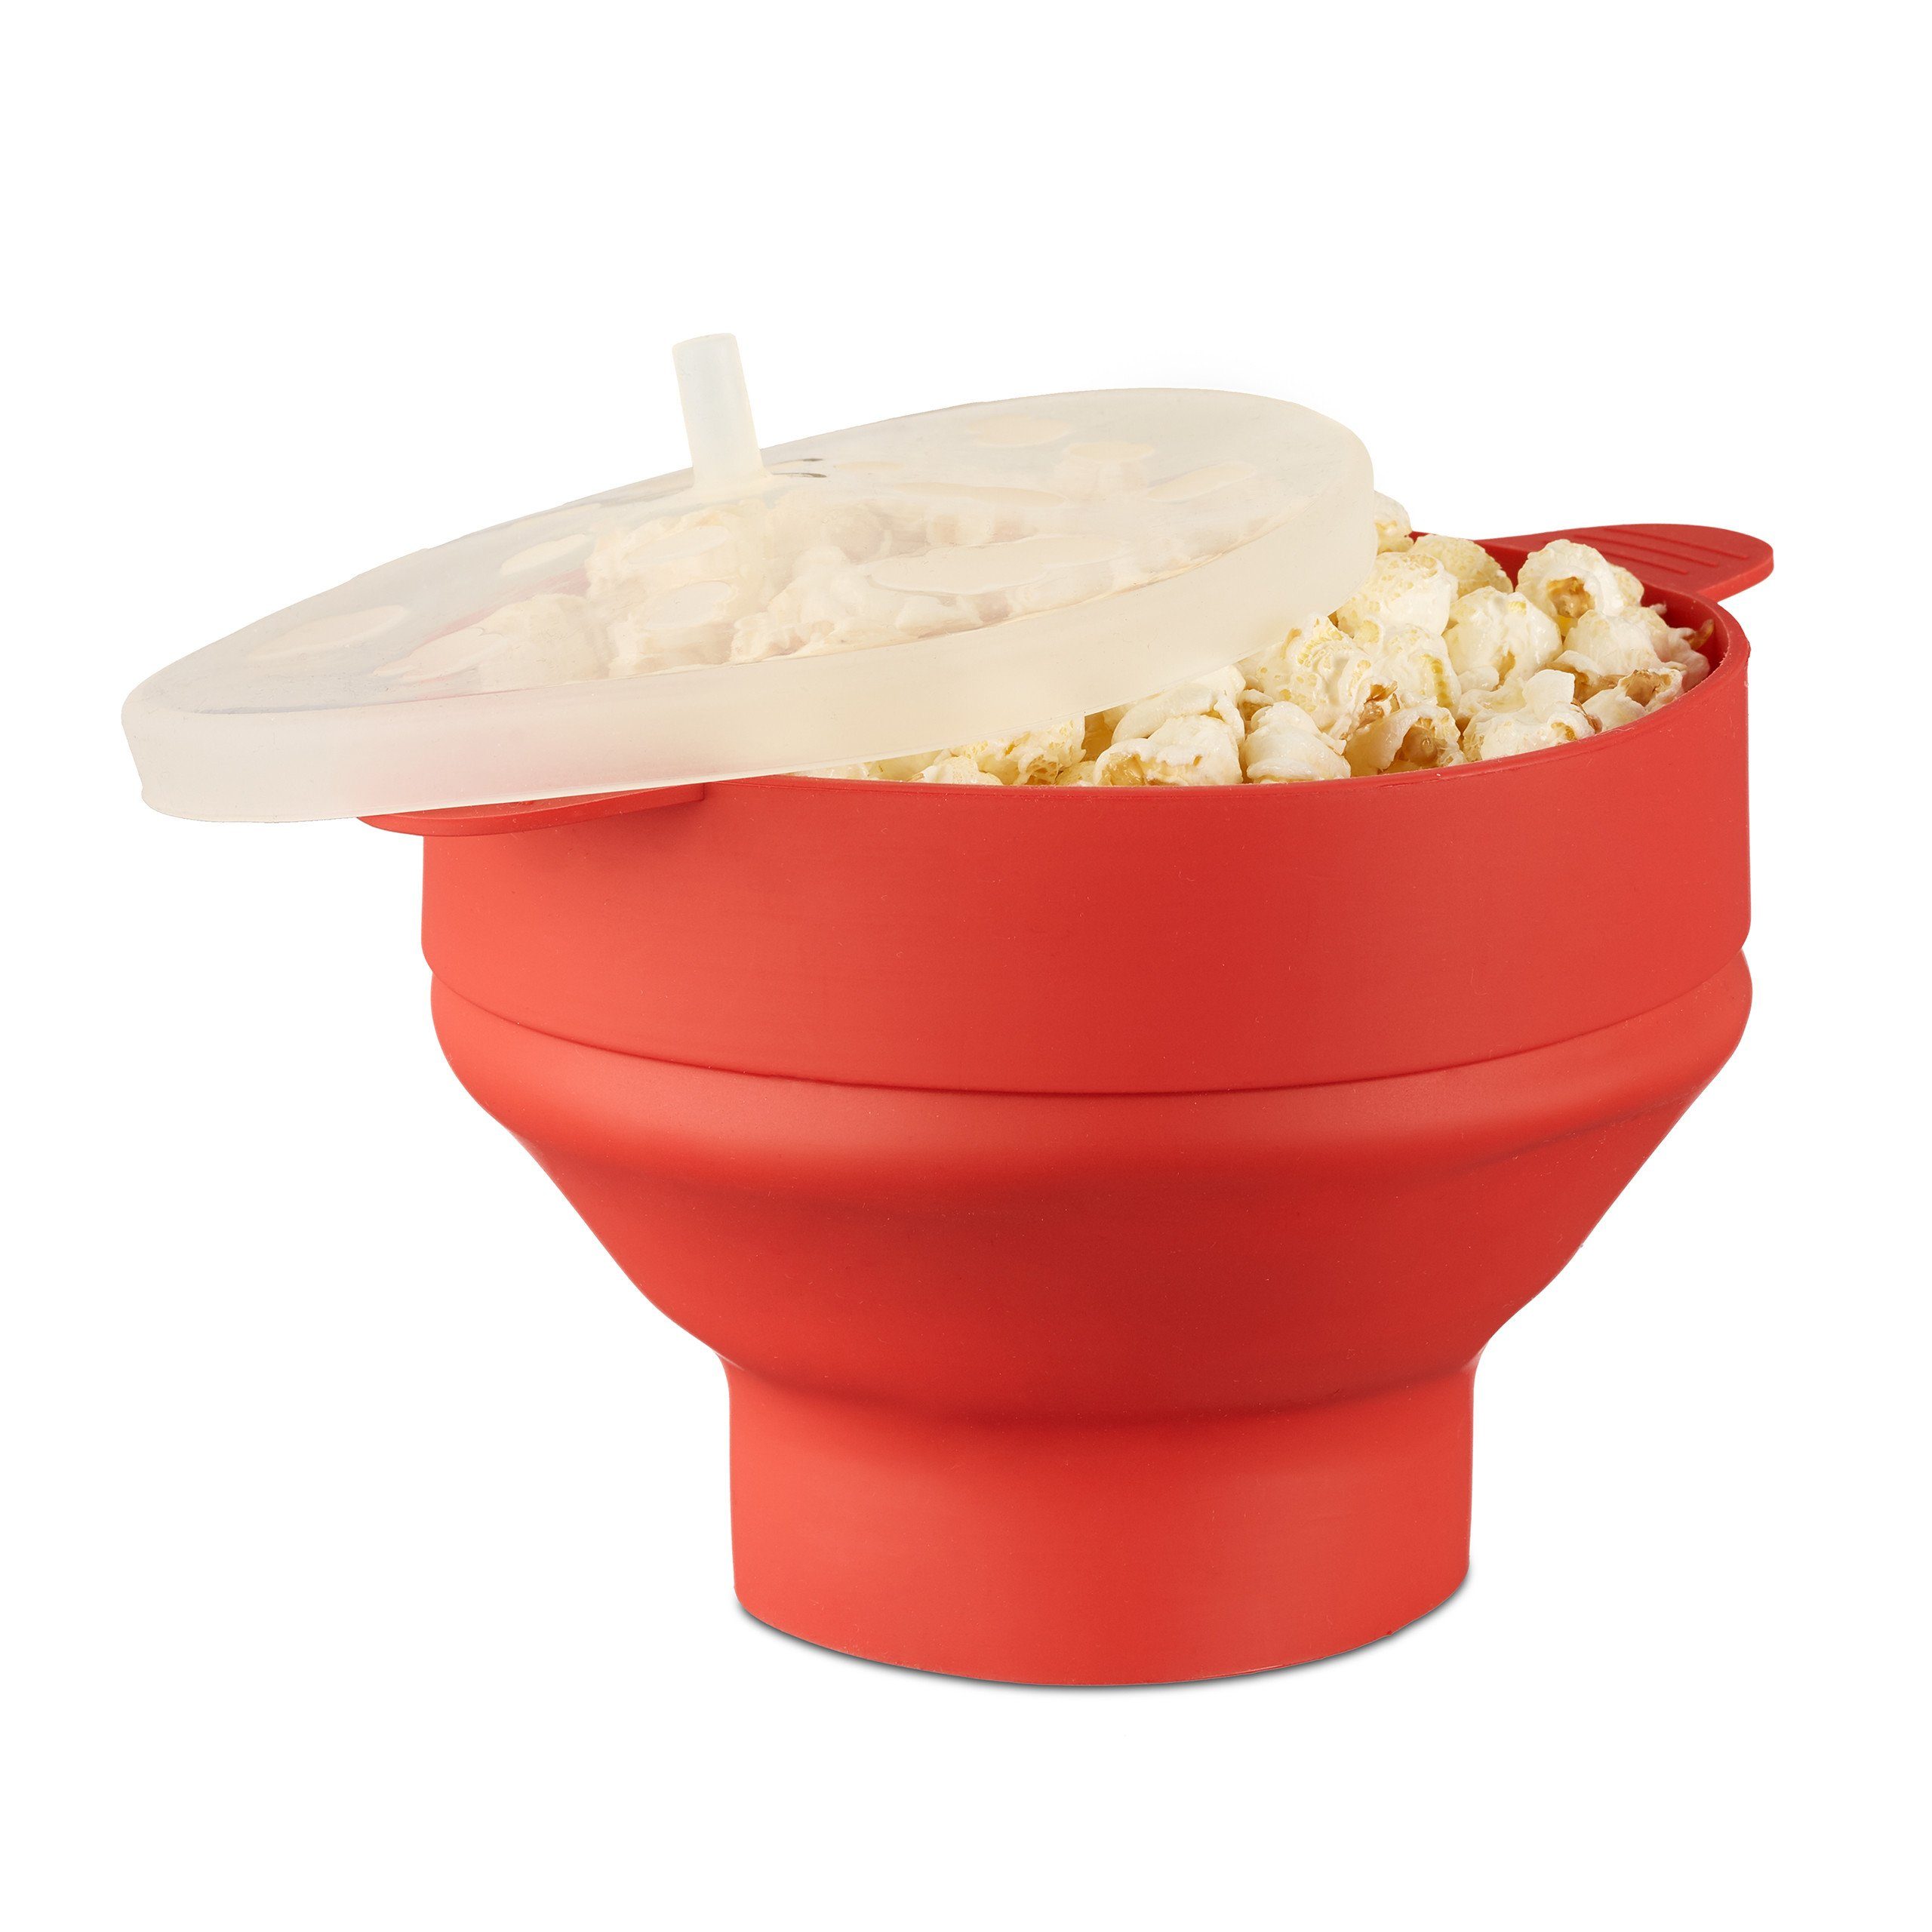 relaxdays Schüssel Popcorn Maker Transparent Mikrowelle, Rot Rot die Silikon, Silikon für